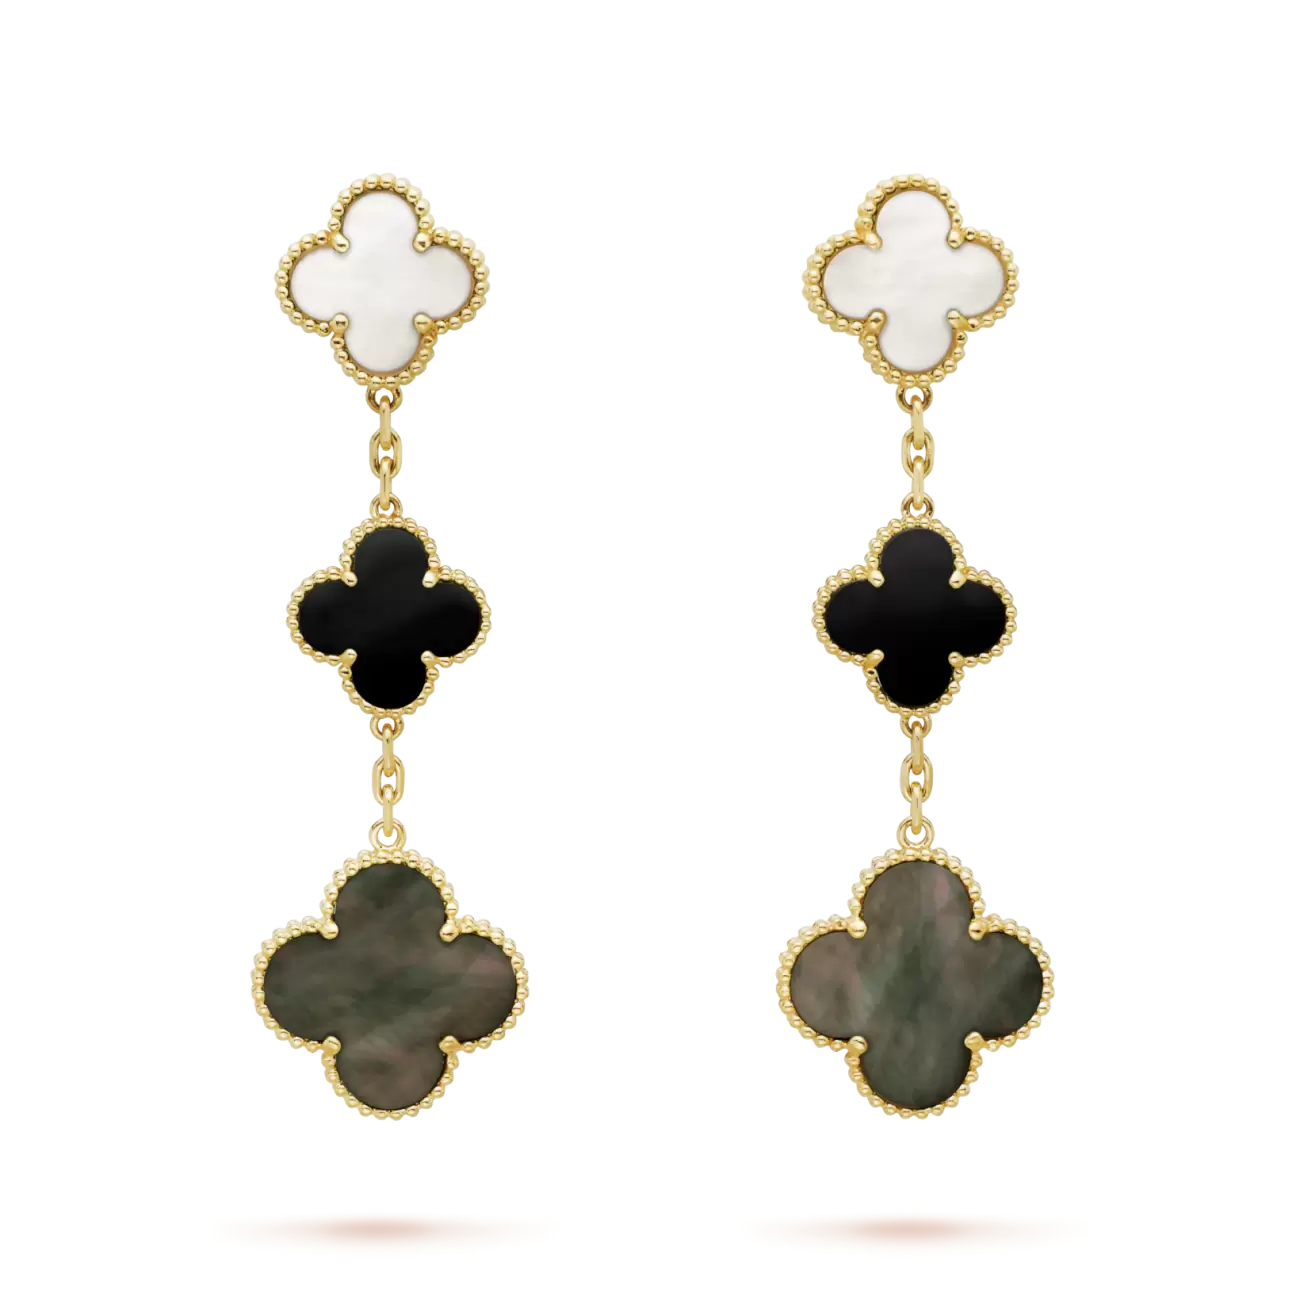 Magic Alhambra earrings, 3 motifs white and gray